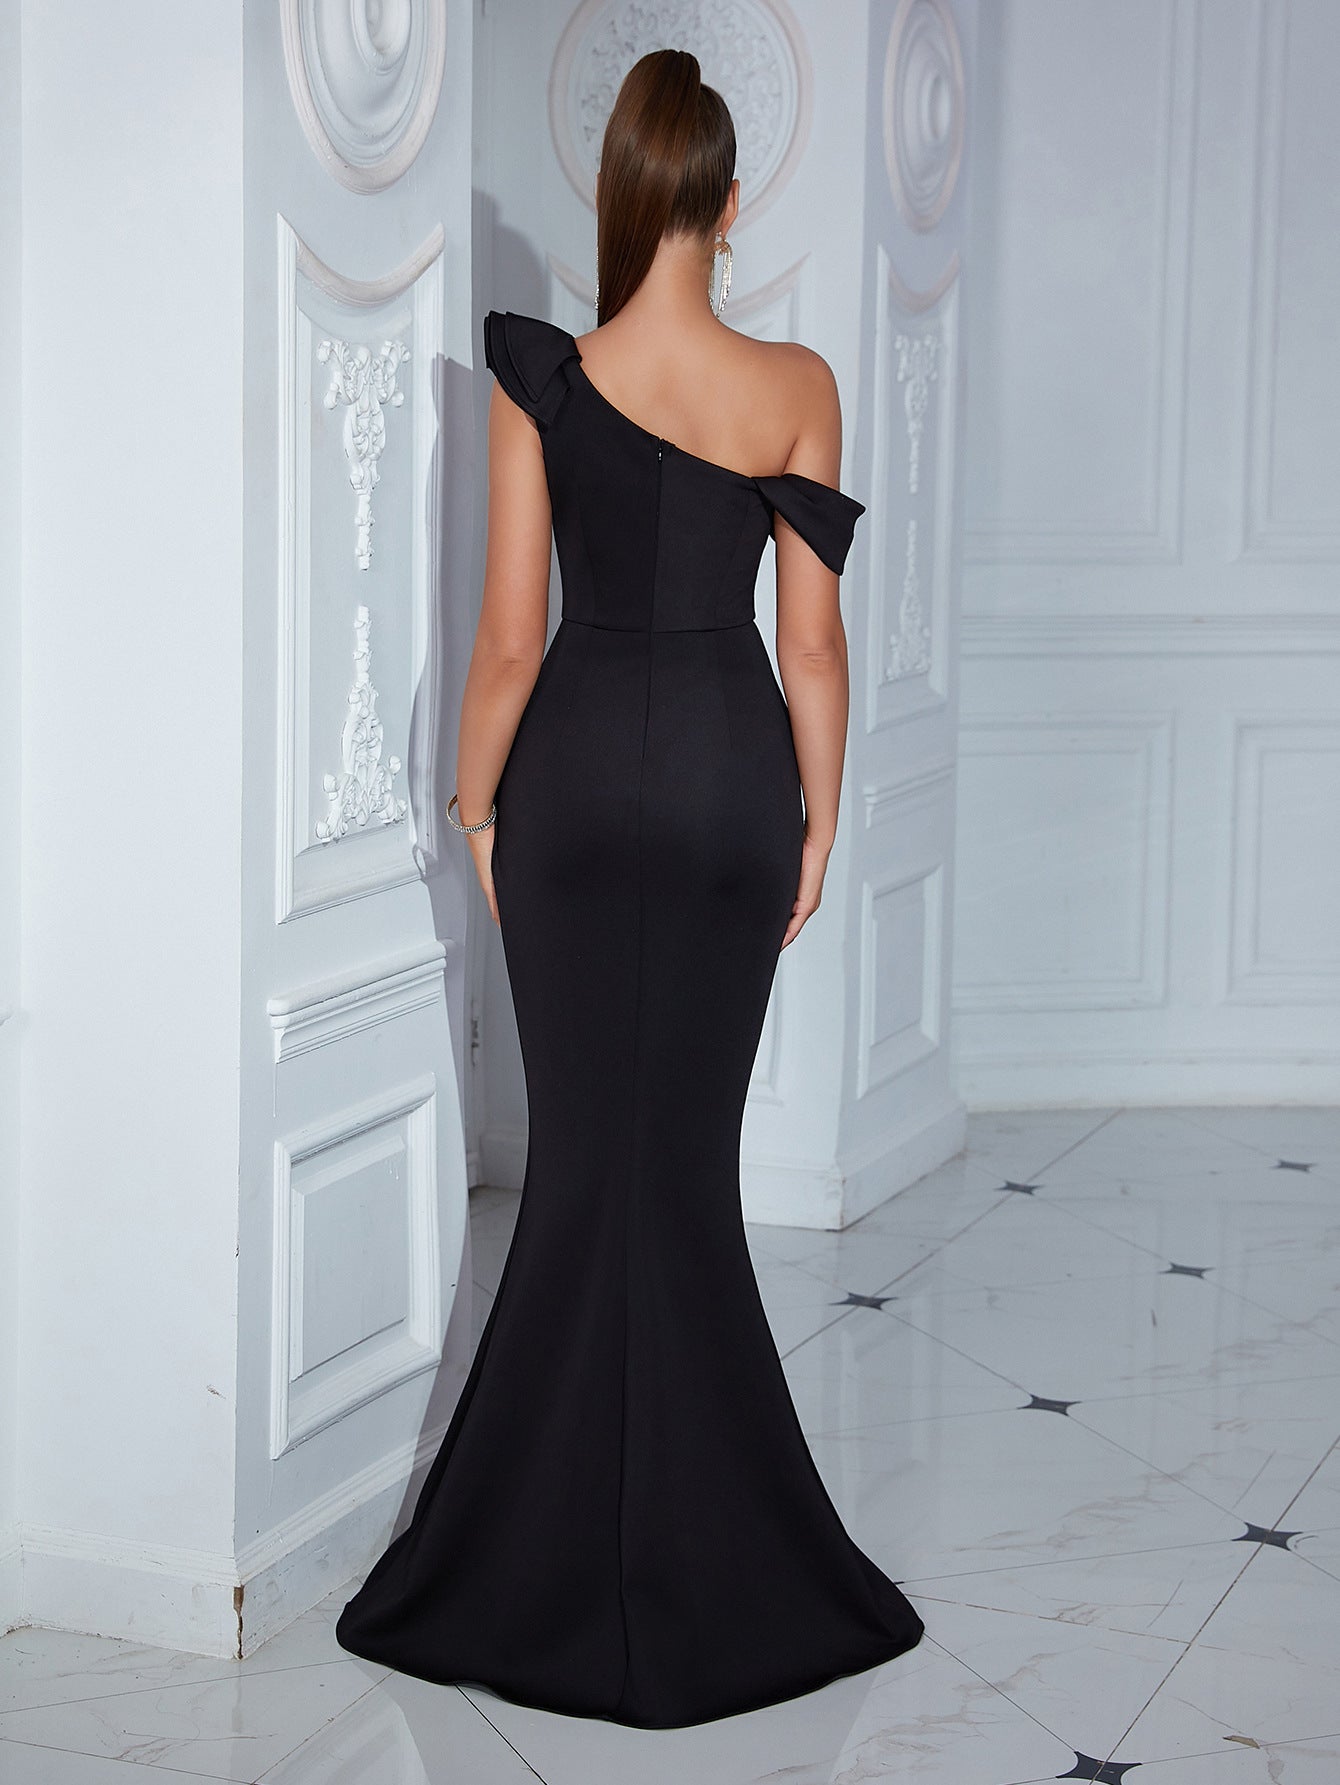 One Shoulder Ruffled Black Evening Dress